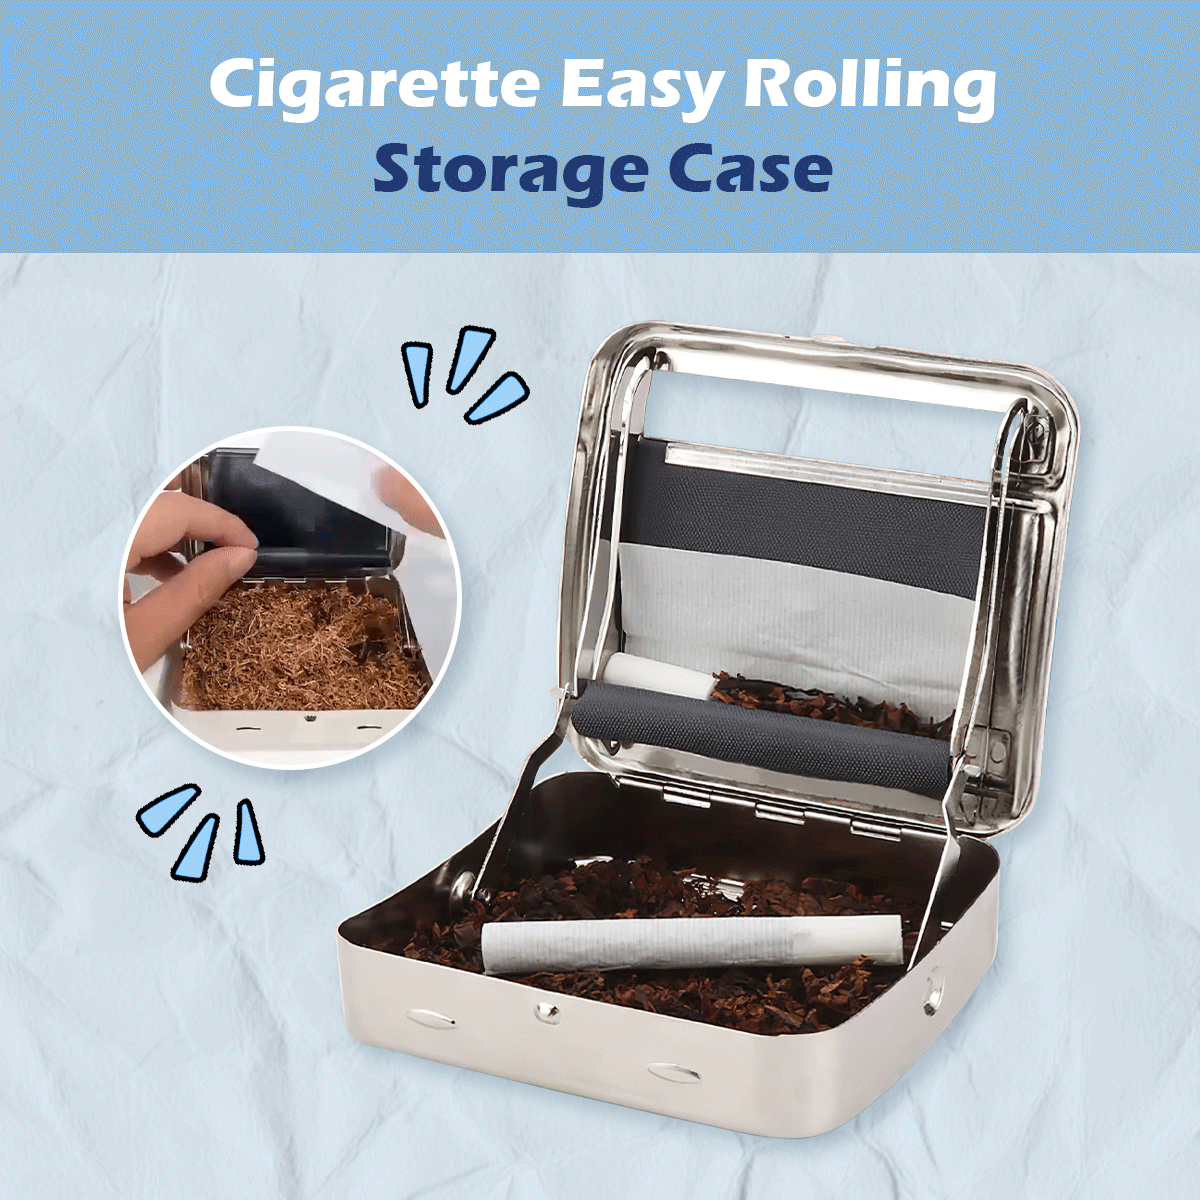 Cigarette Easy Rolling Storage Case